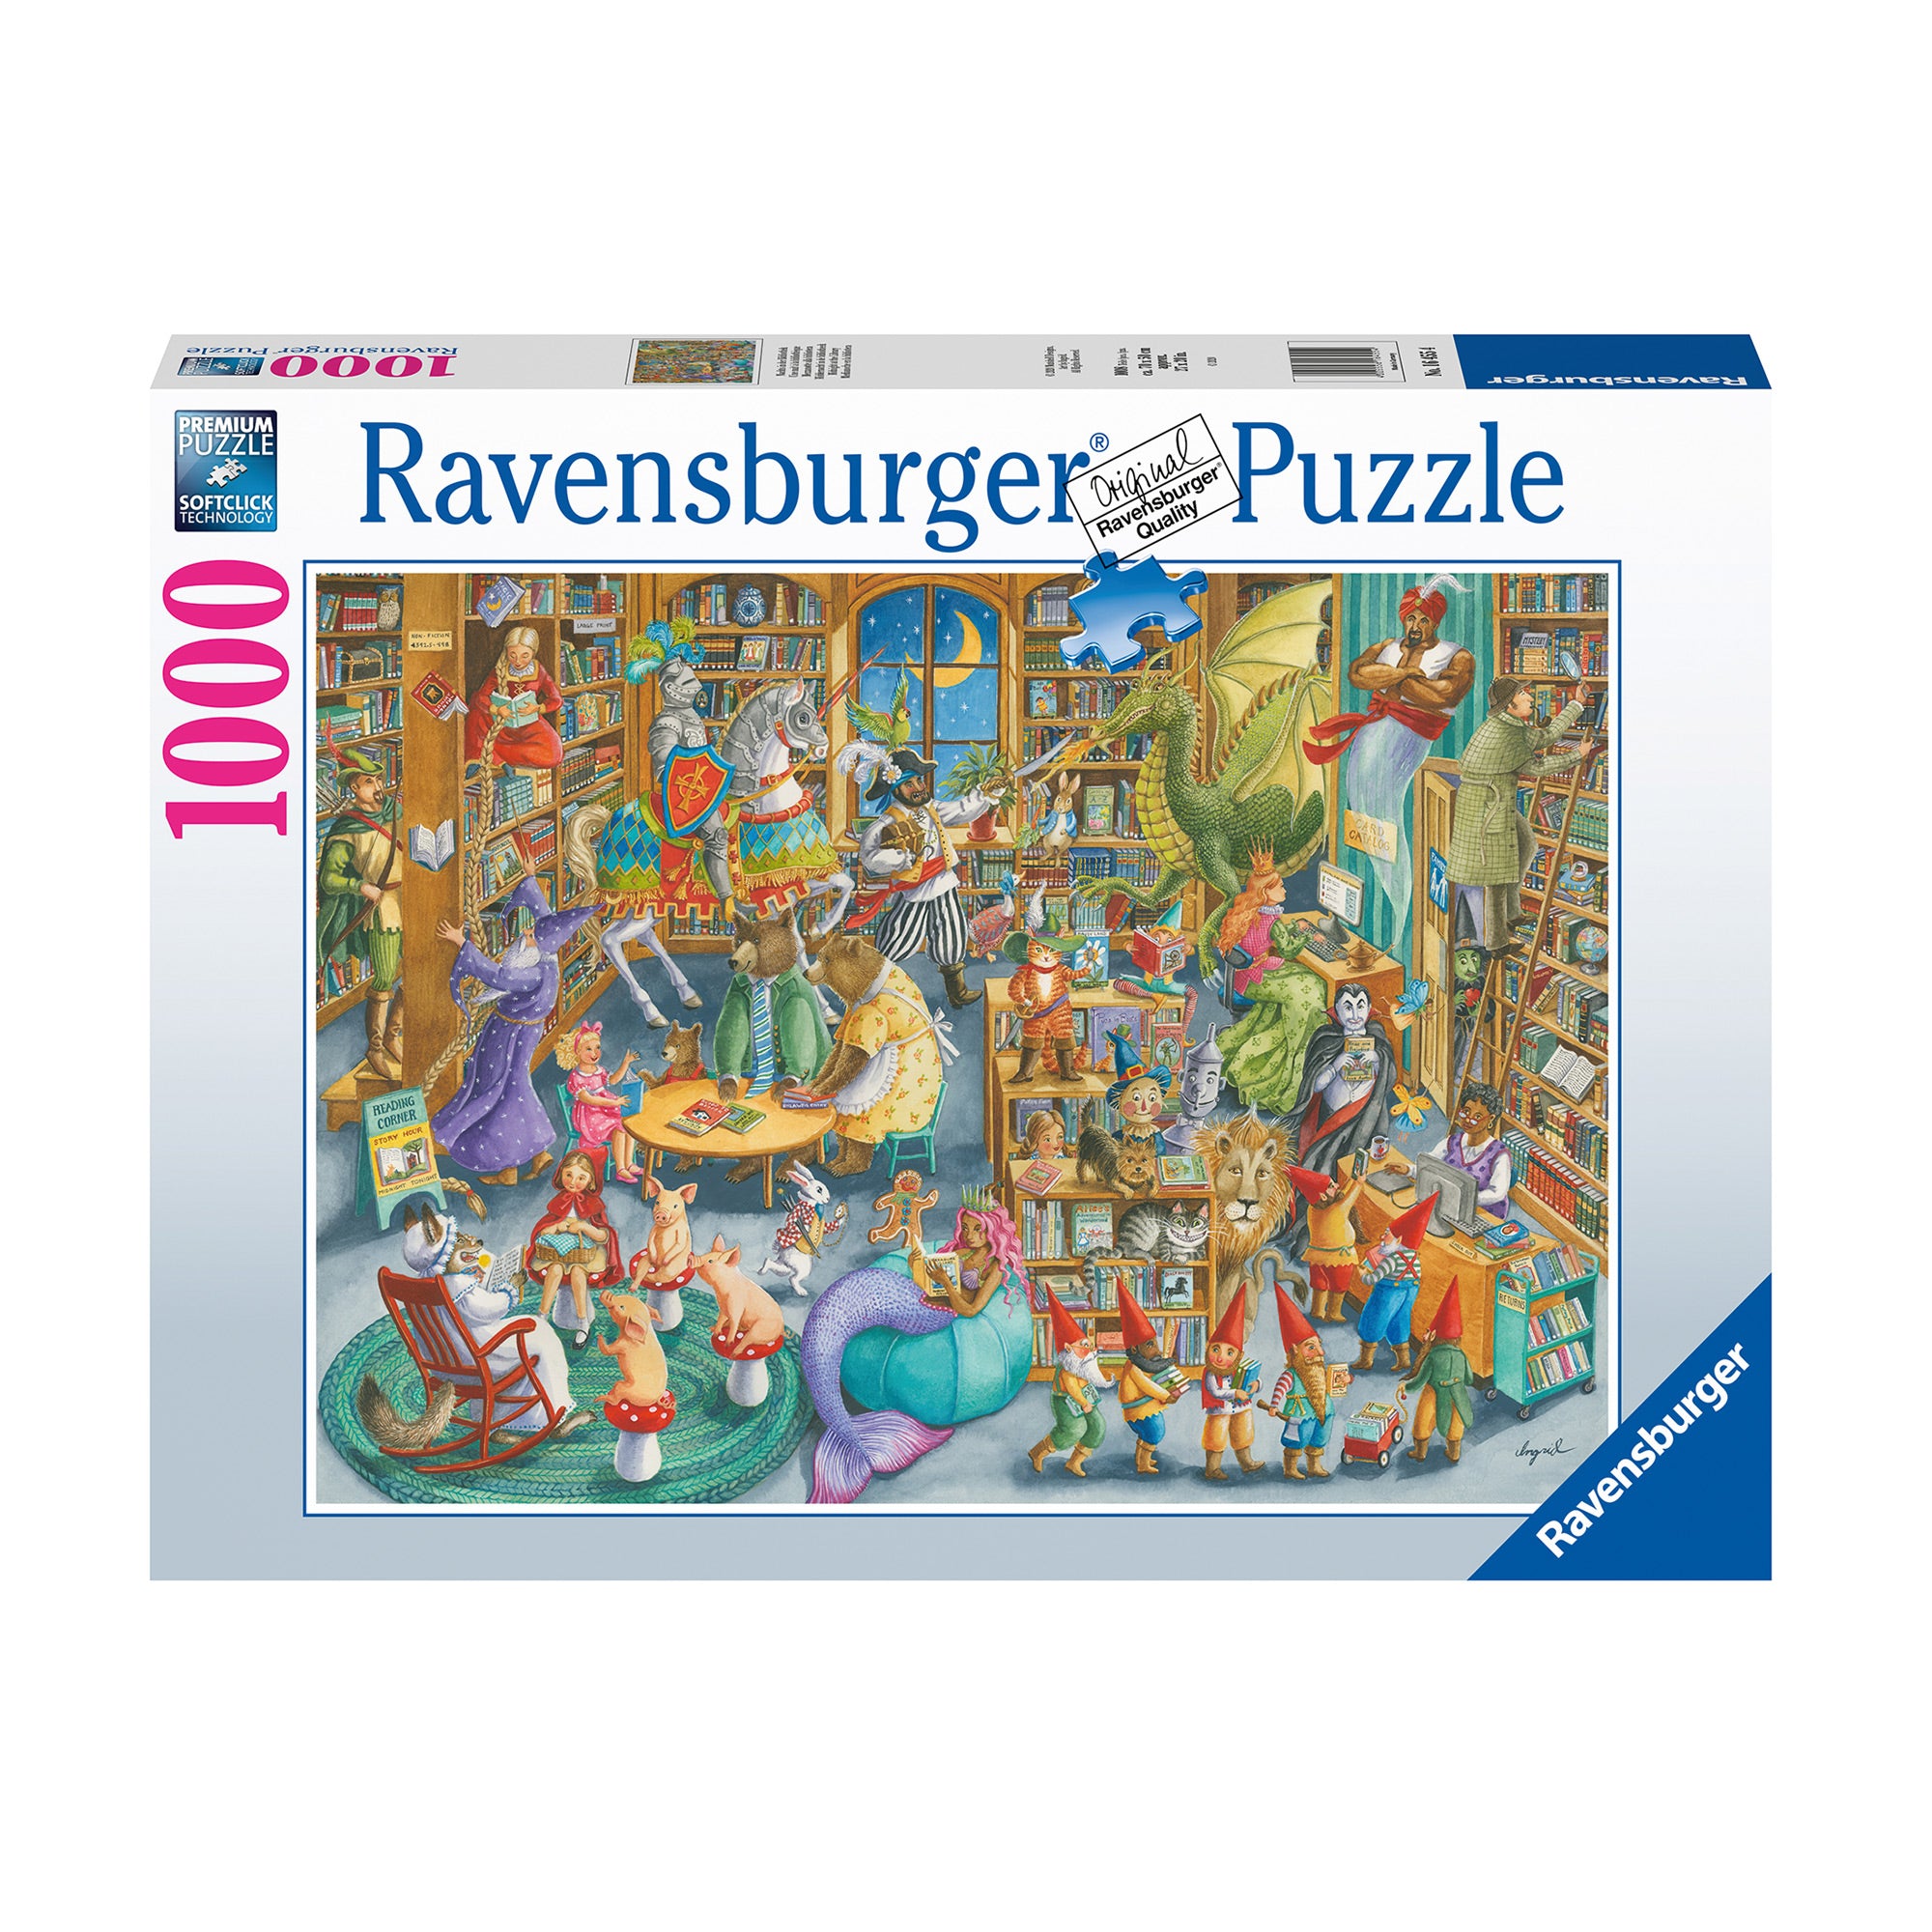 Ravensburger Puzzle colle -200 ml - permanent